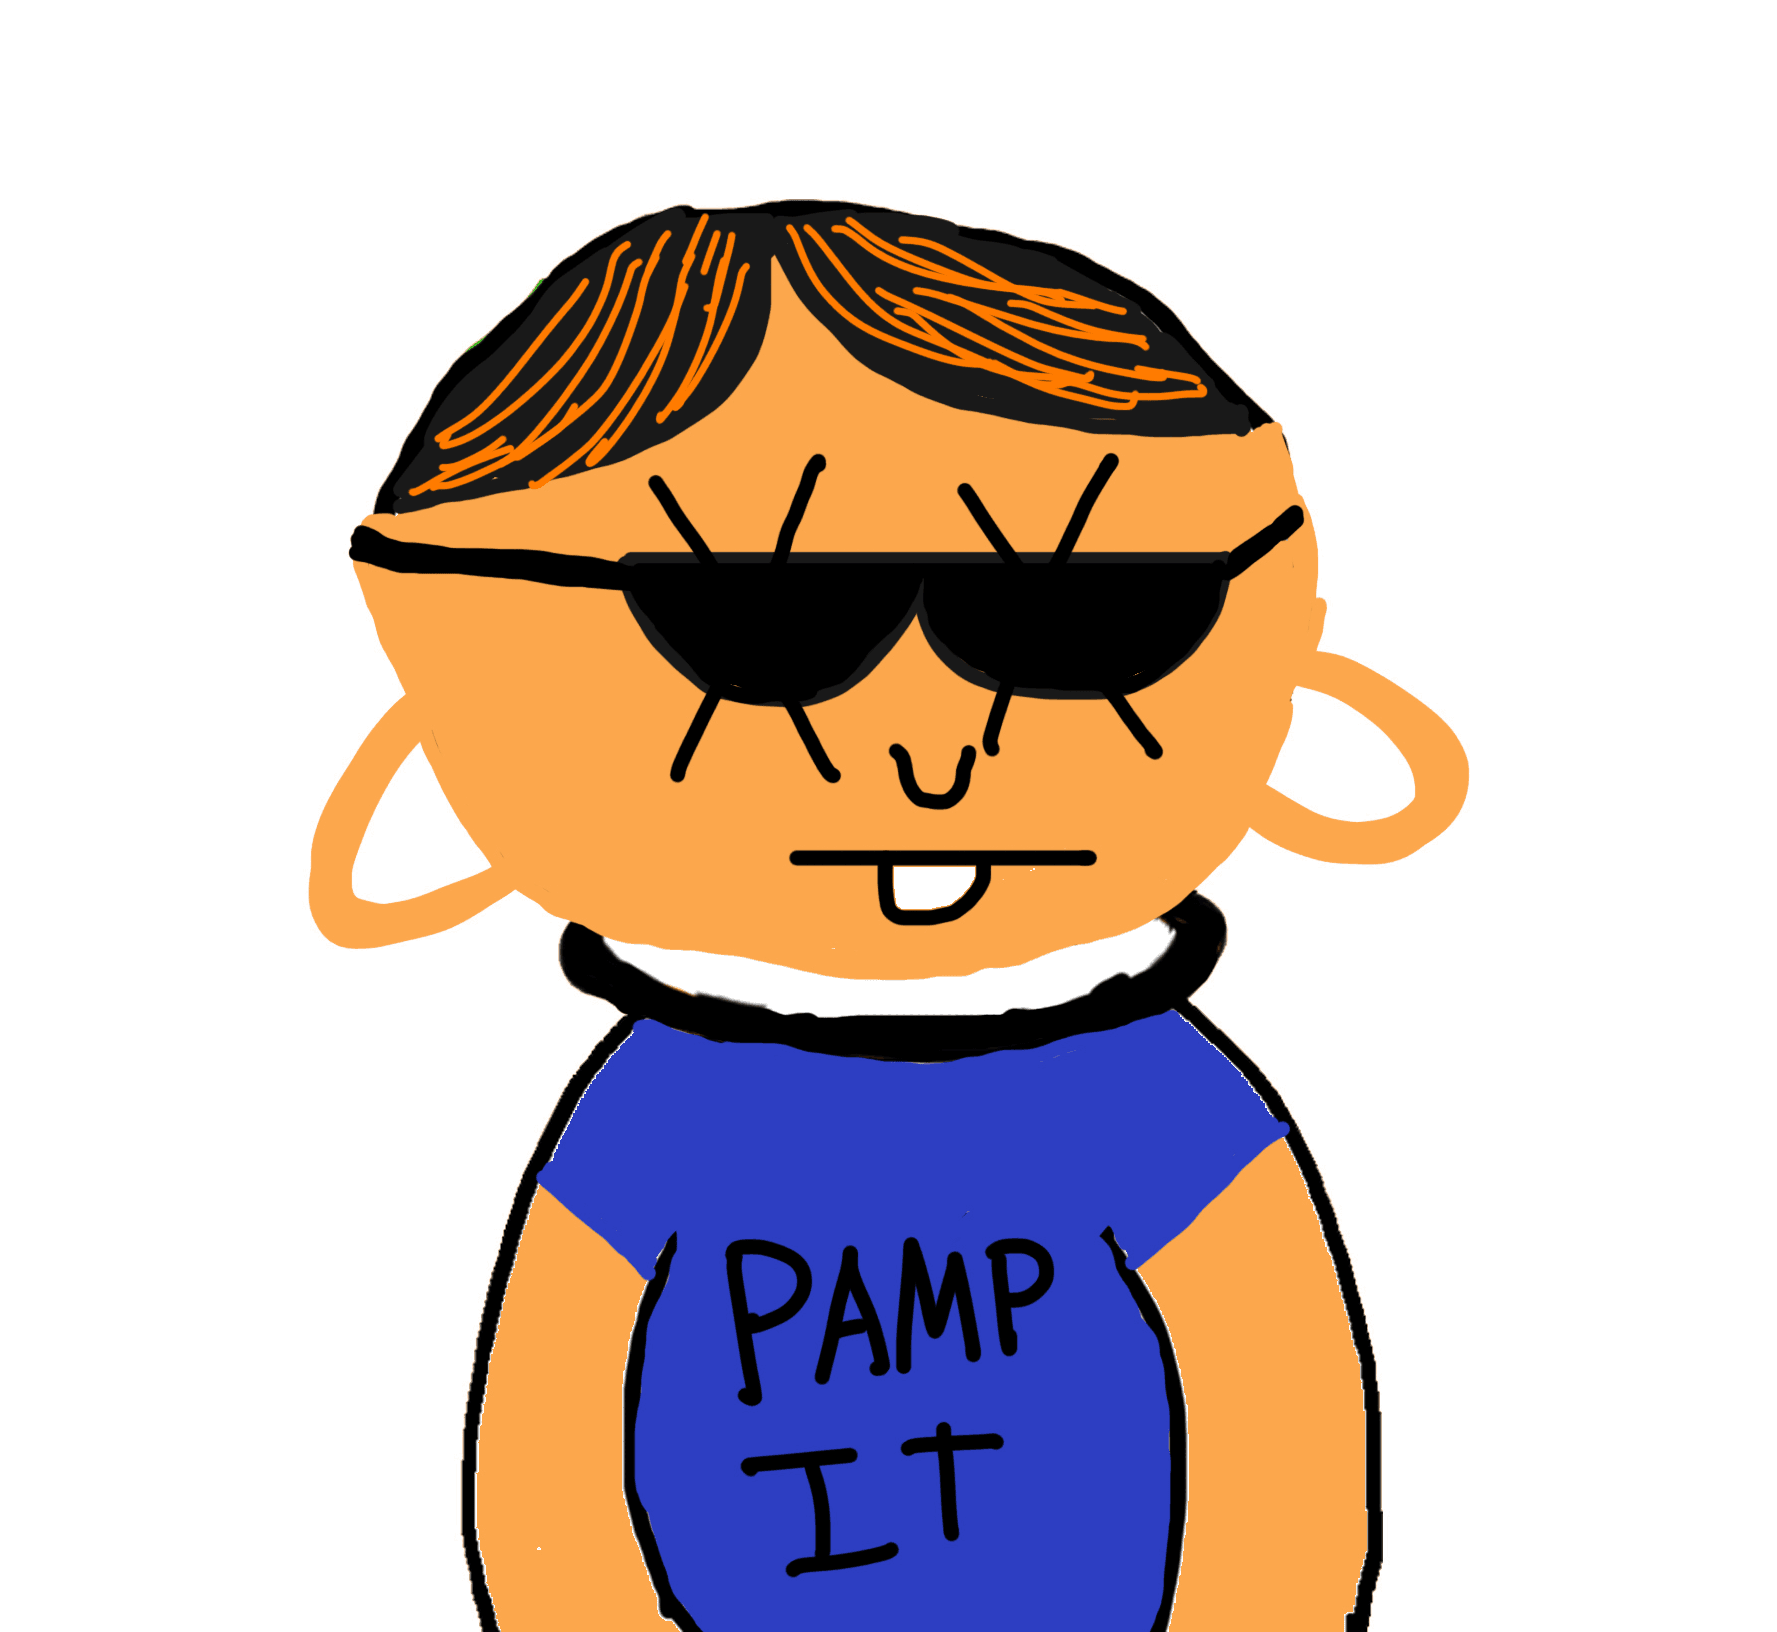 Pamp_It